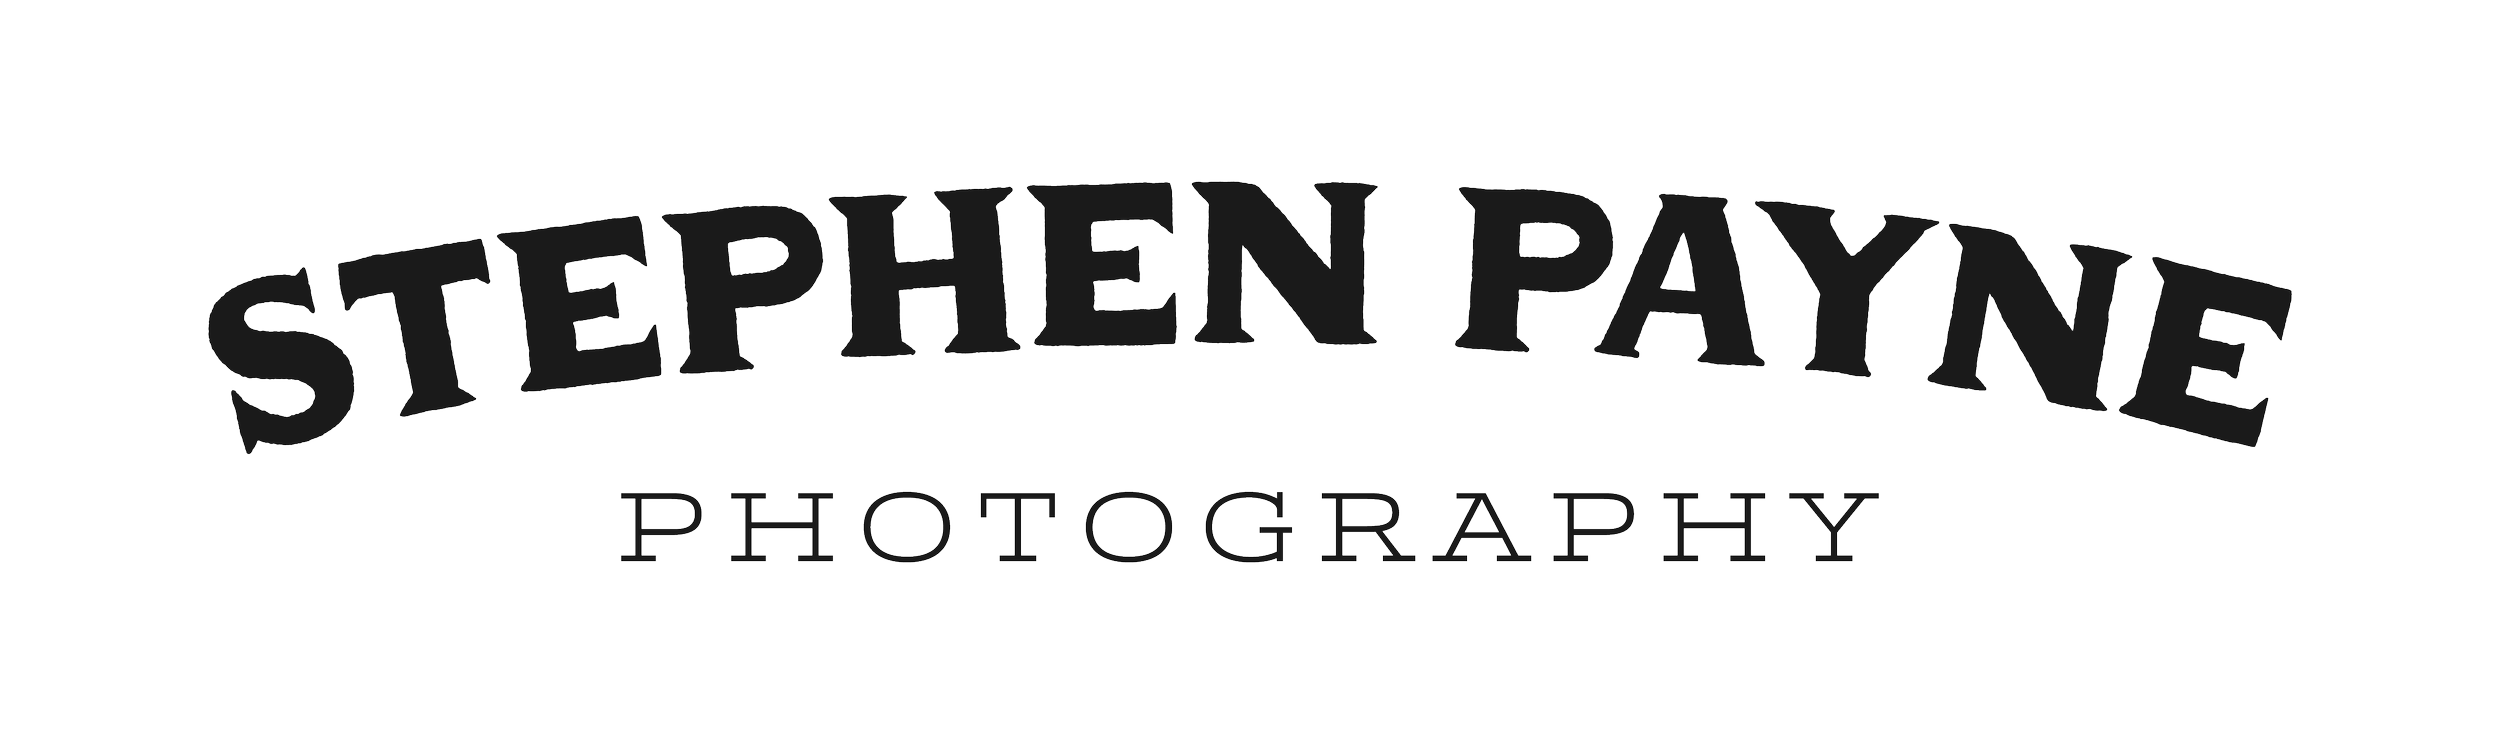 Stephen Payne Photography